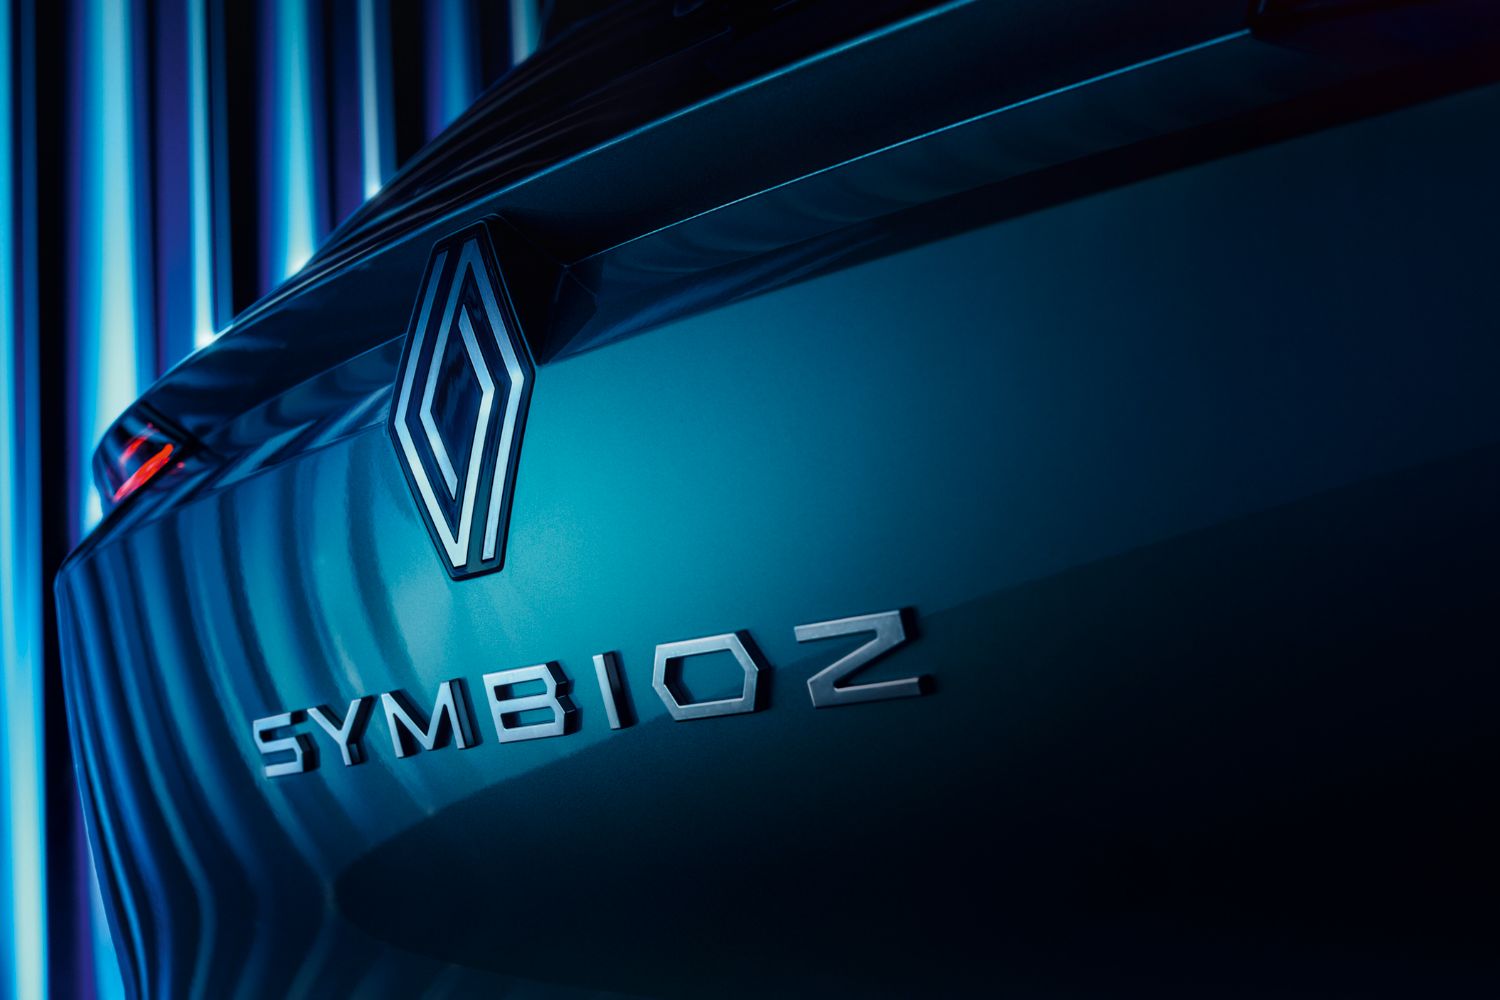 Renault names its new SUV Symbioz